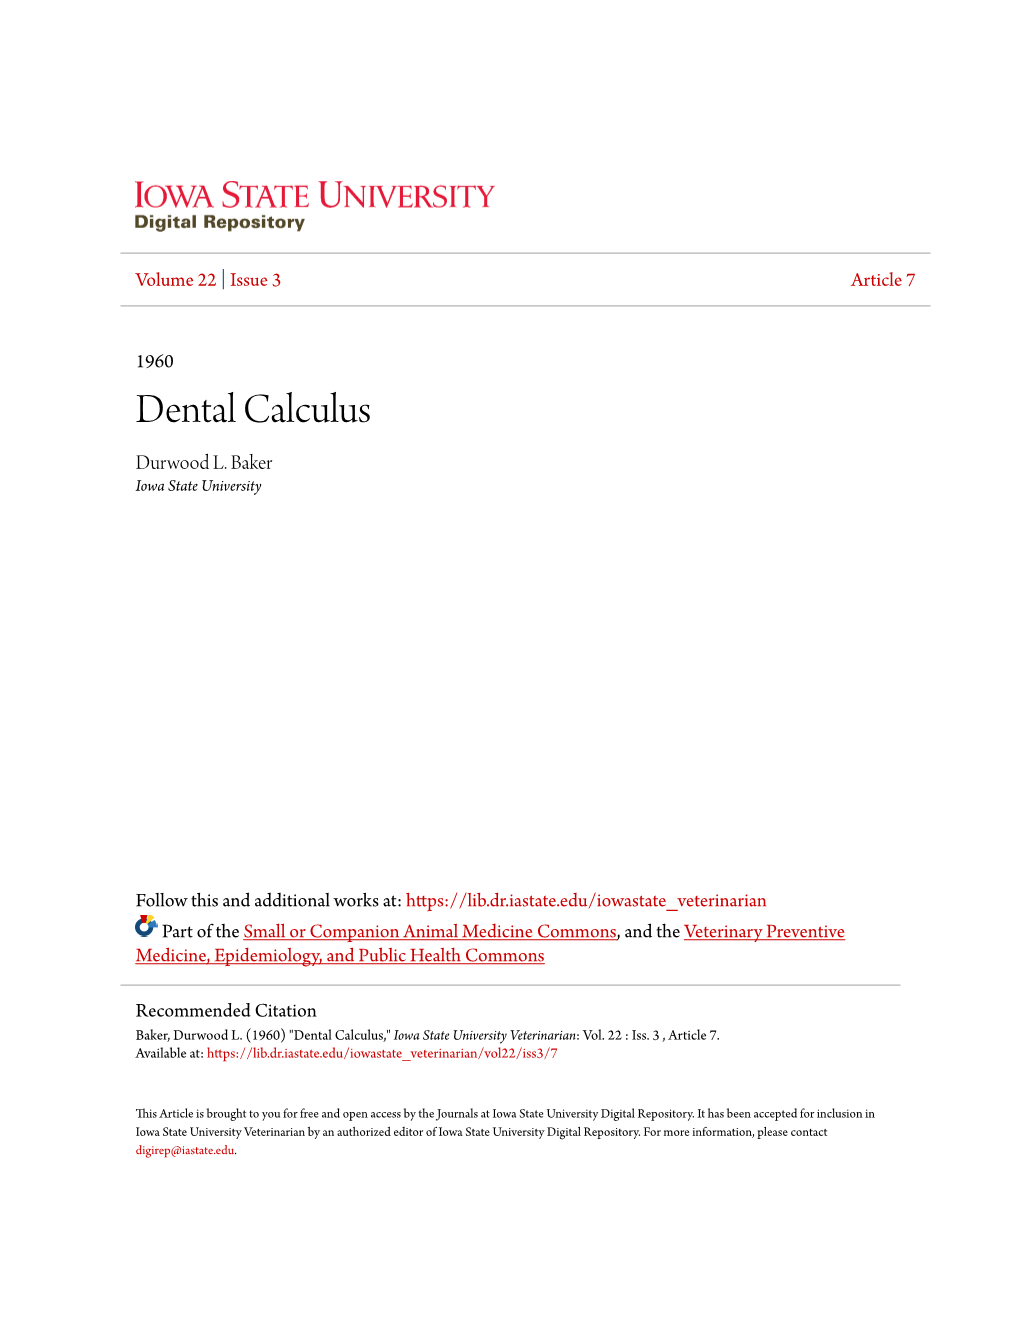 Dental Calculus Durwood L